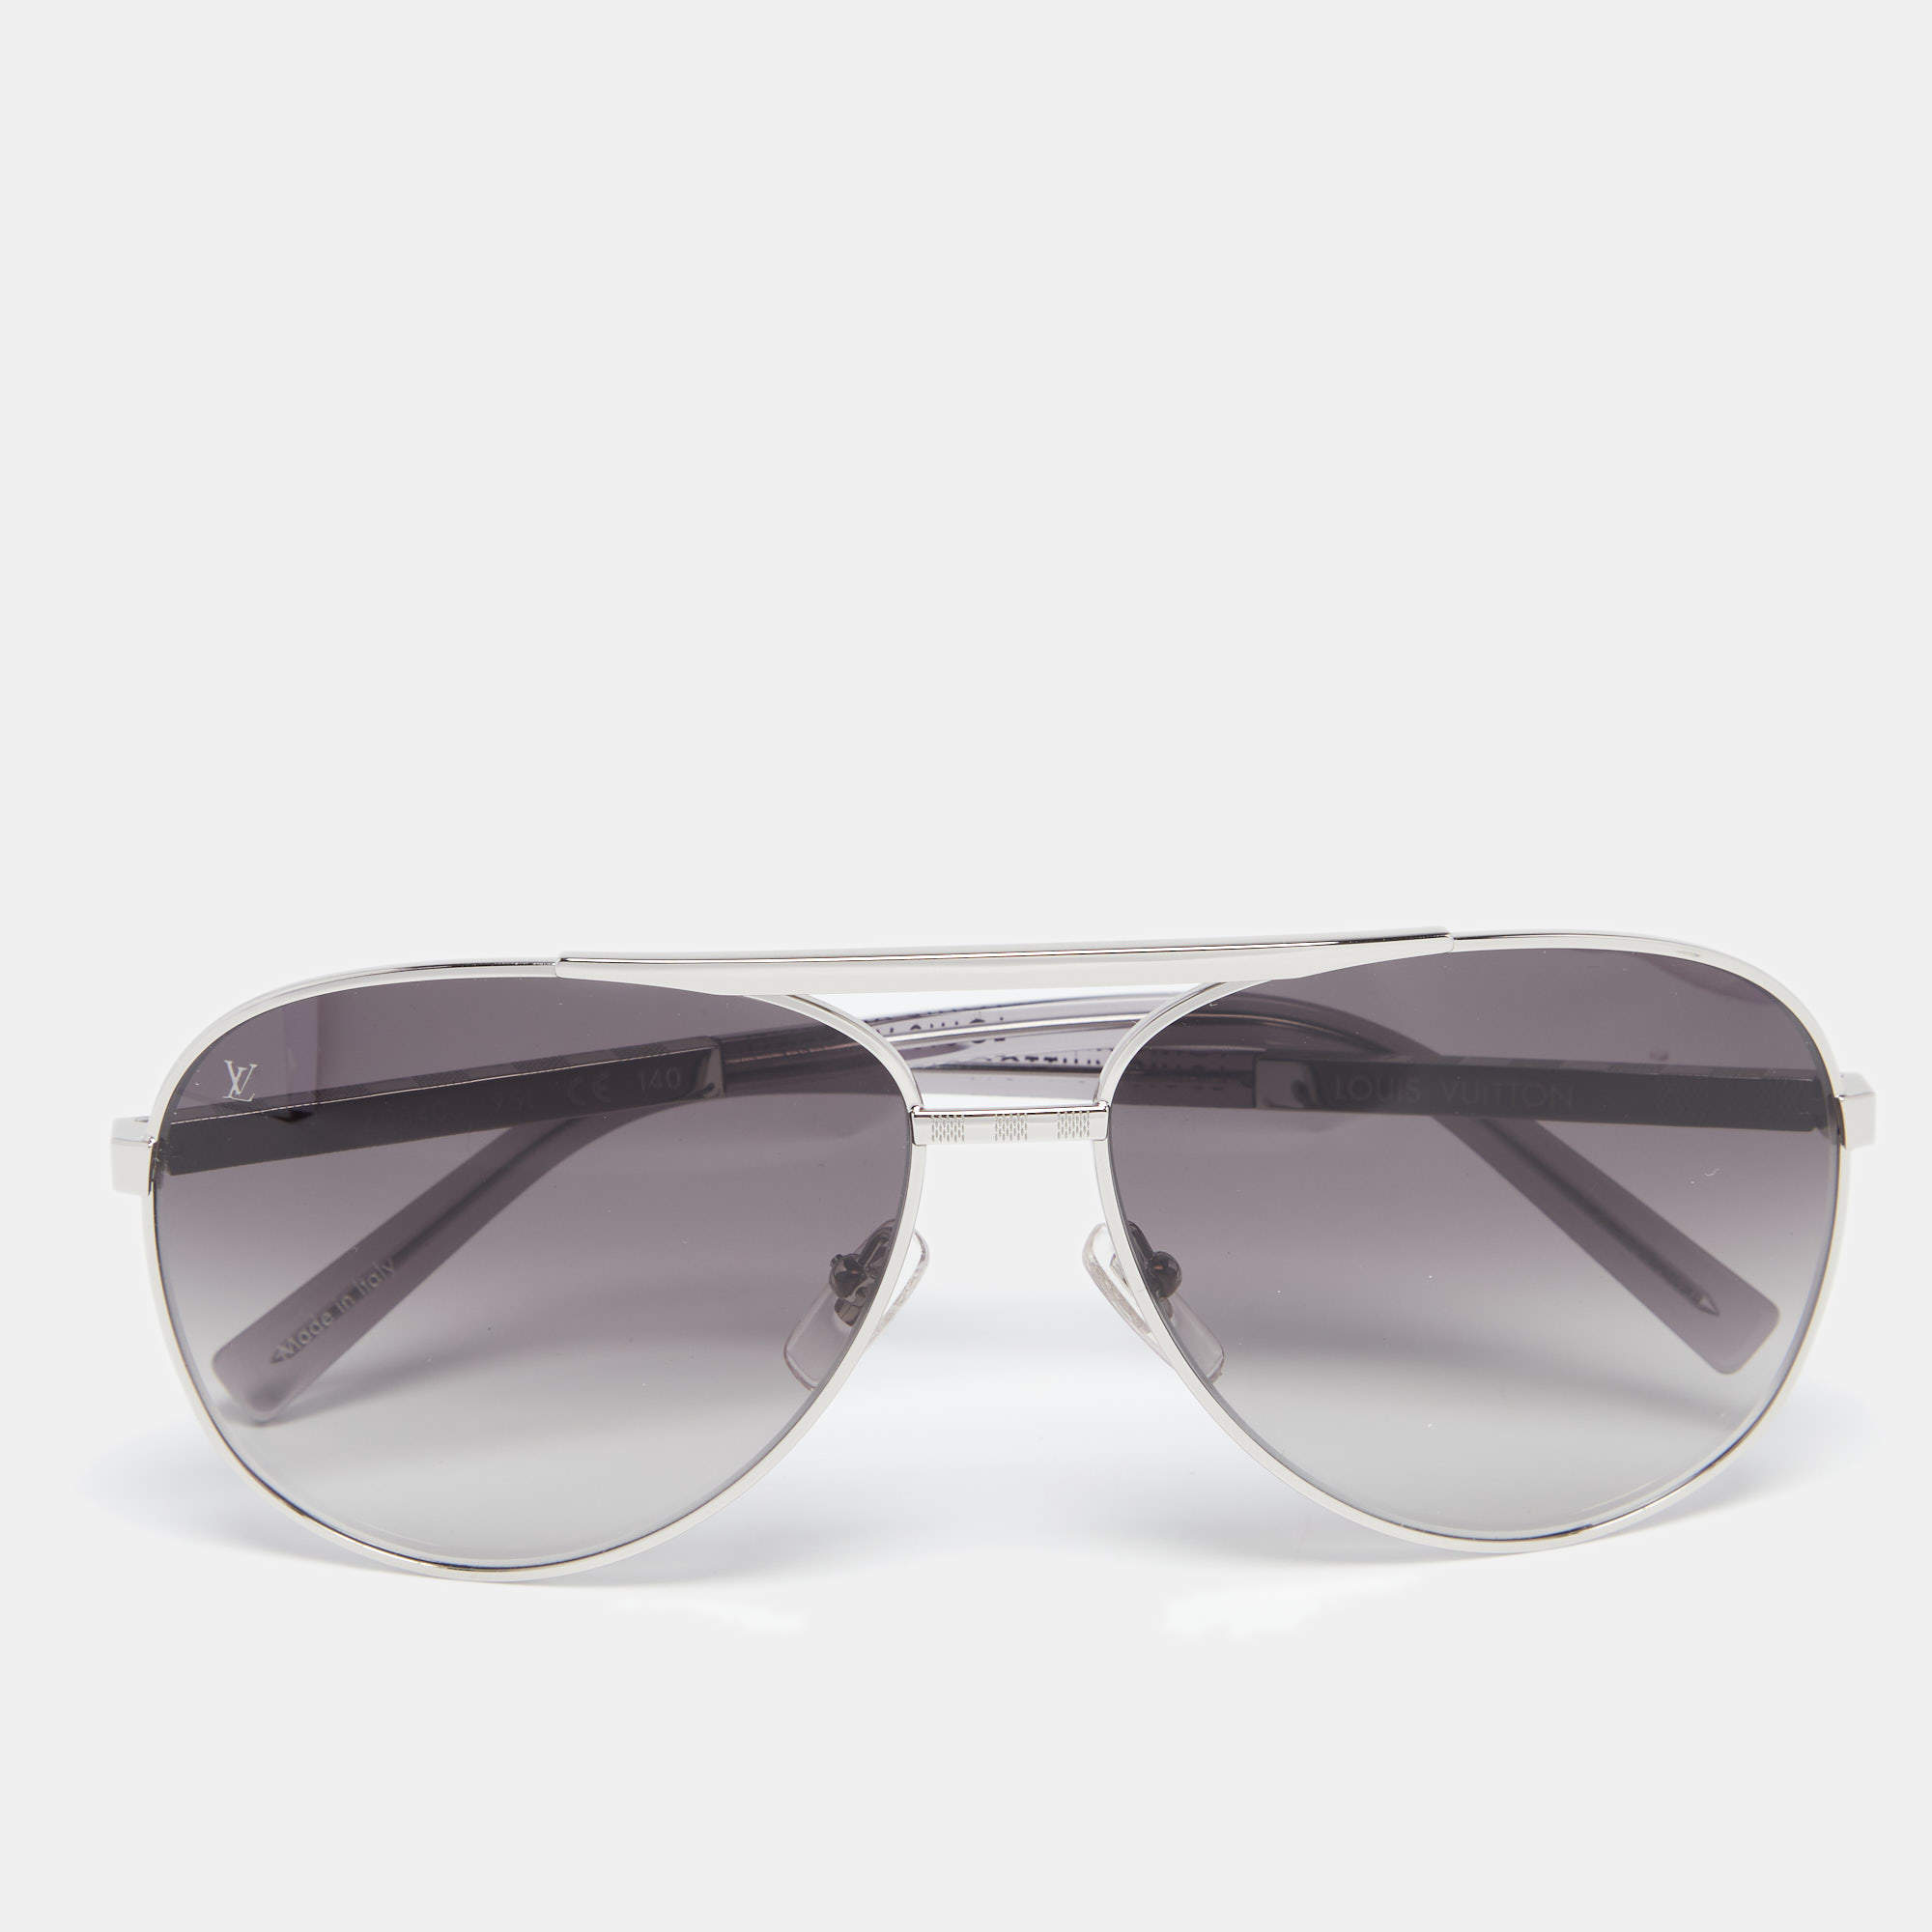 Louis Vuitton Attitude Pilote Sunglasses Silver Metal. Size U